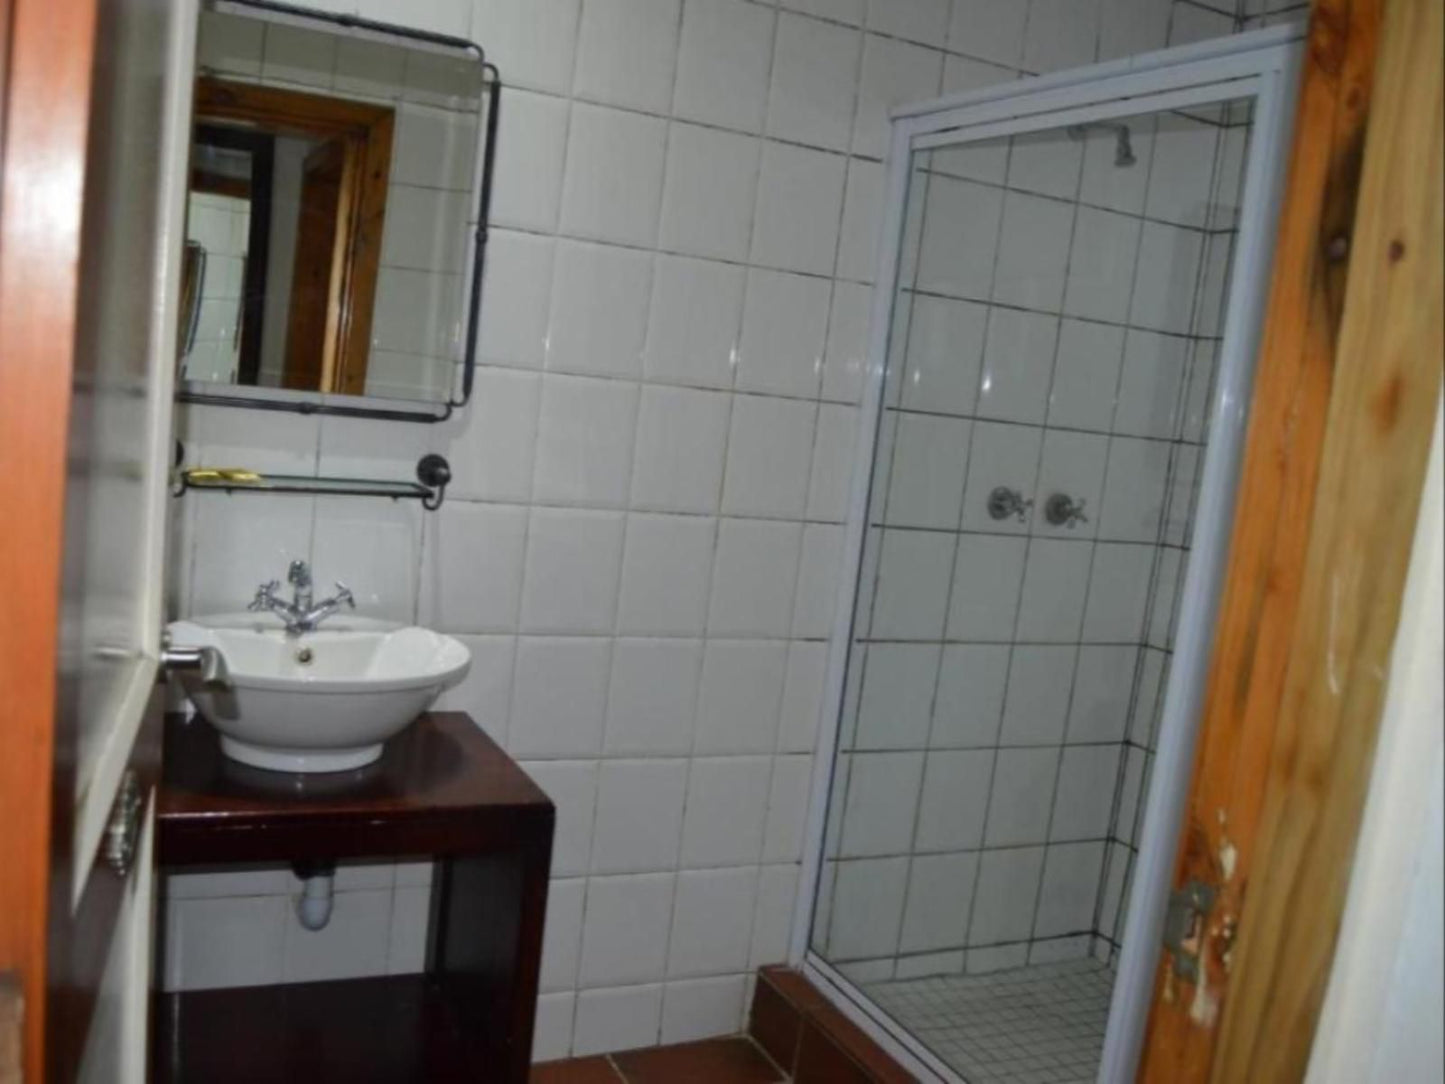 The George Hotel Eshowe Kwazulu Natal South Africa Selective Color, Bathroom